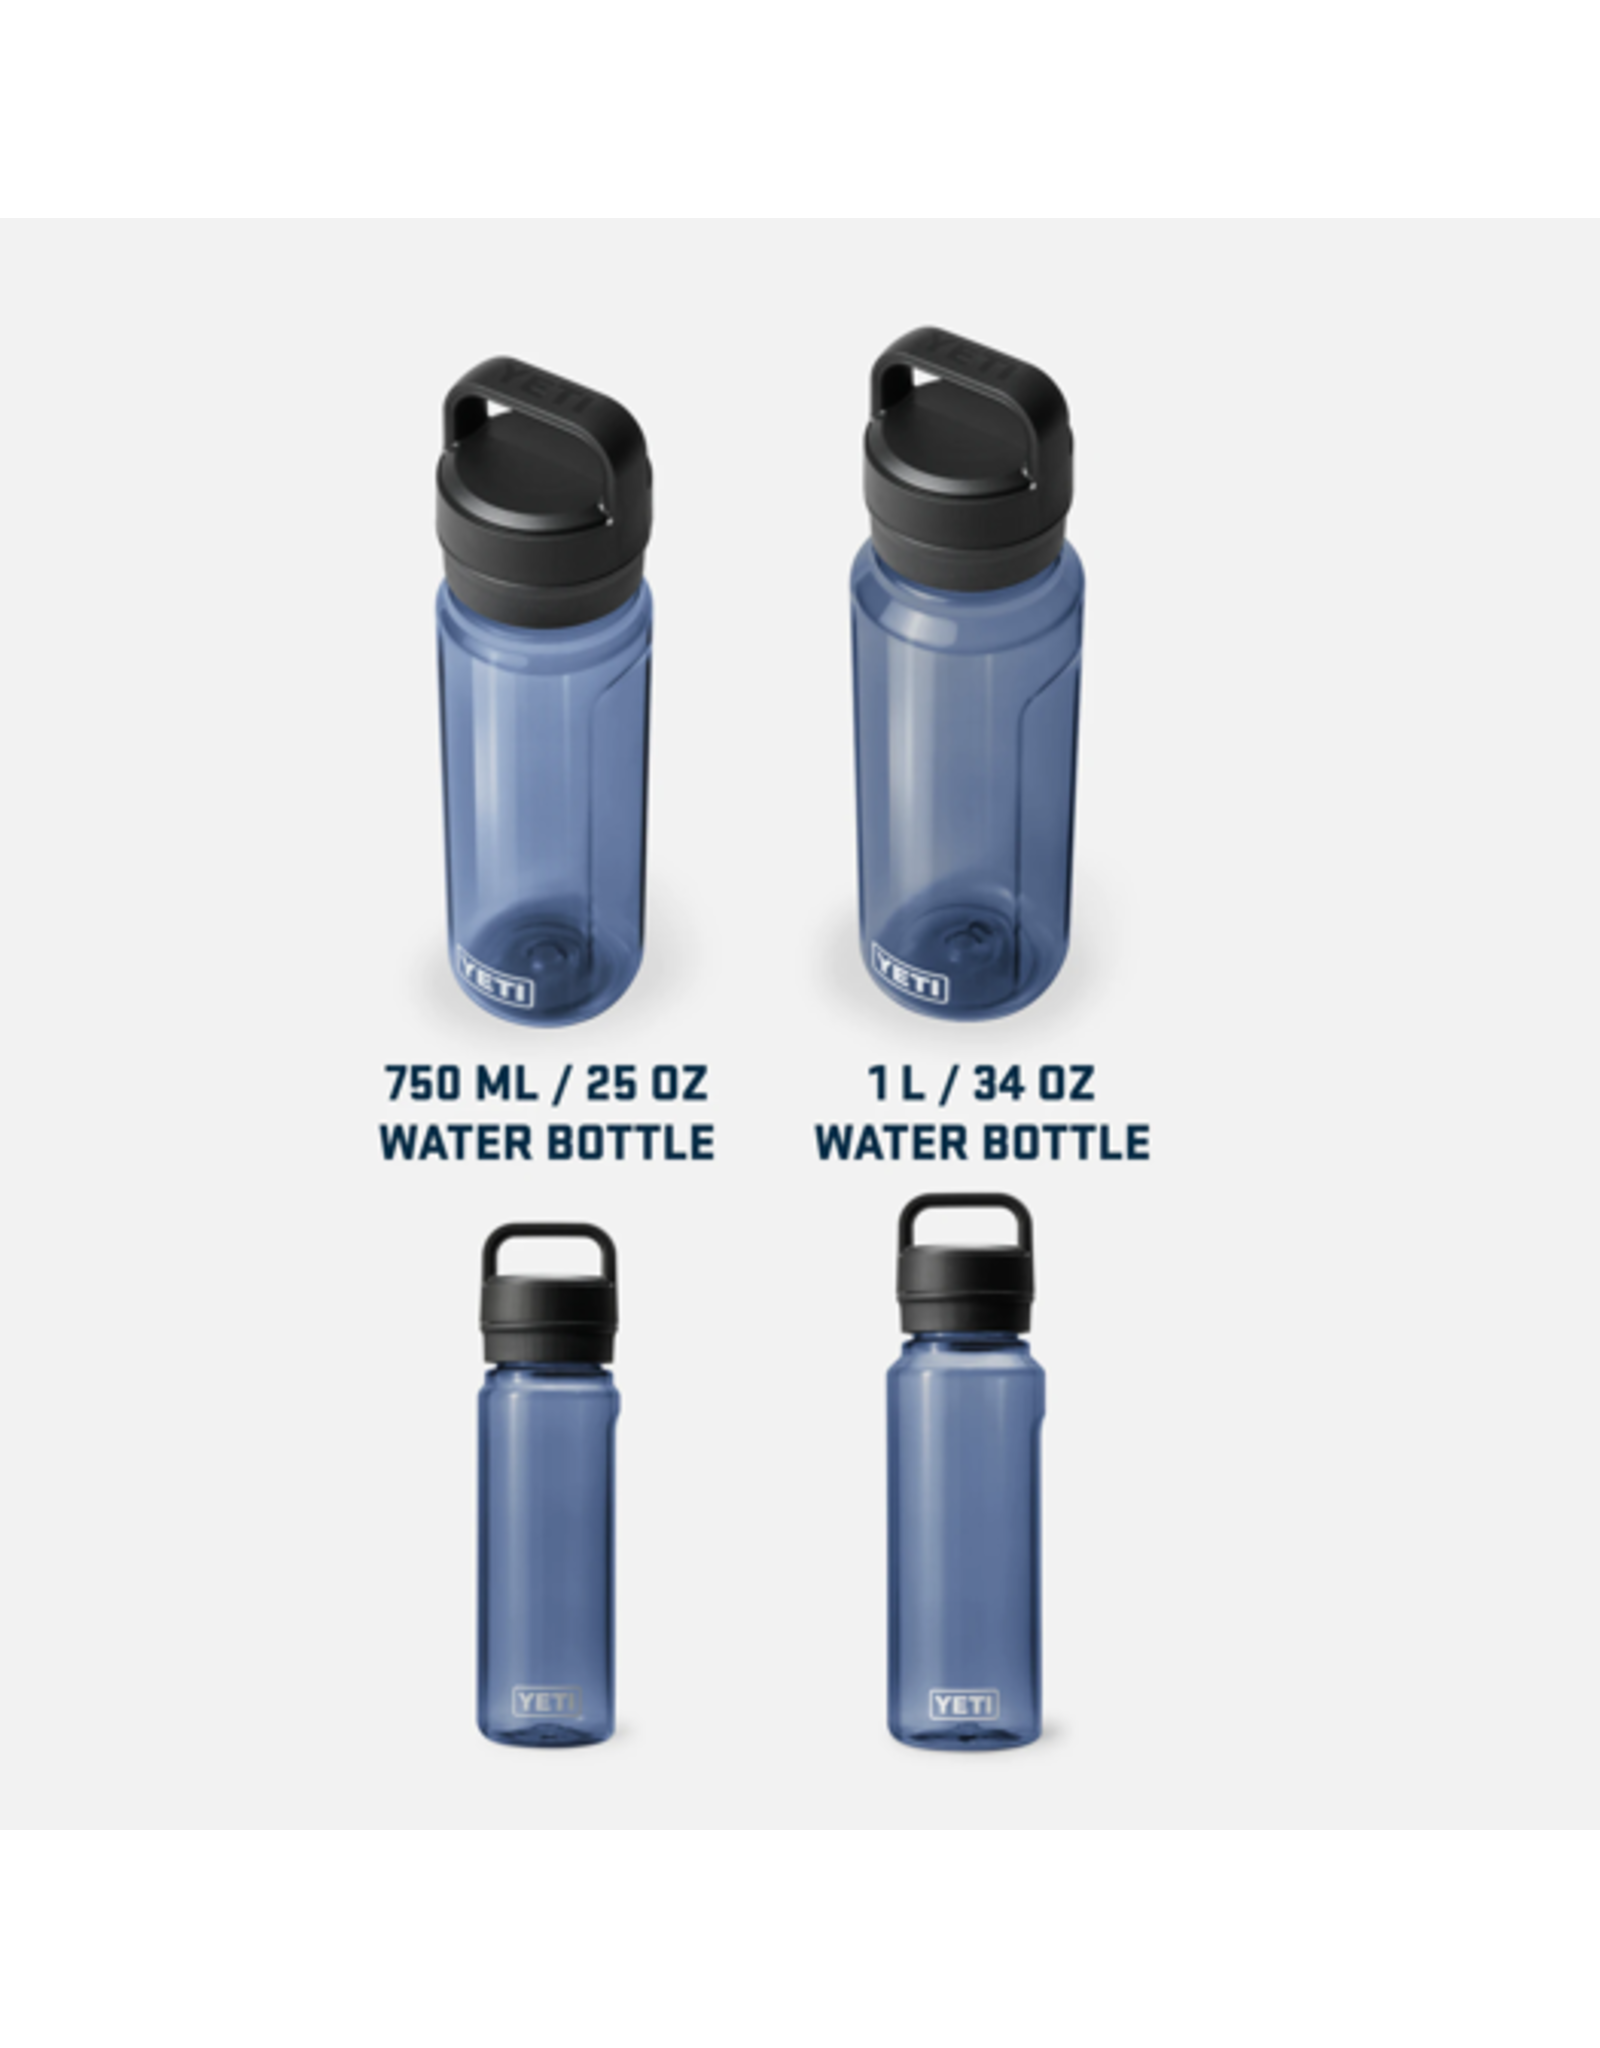 Yonder 1L Water Bottle Charcoal